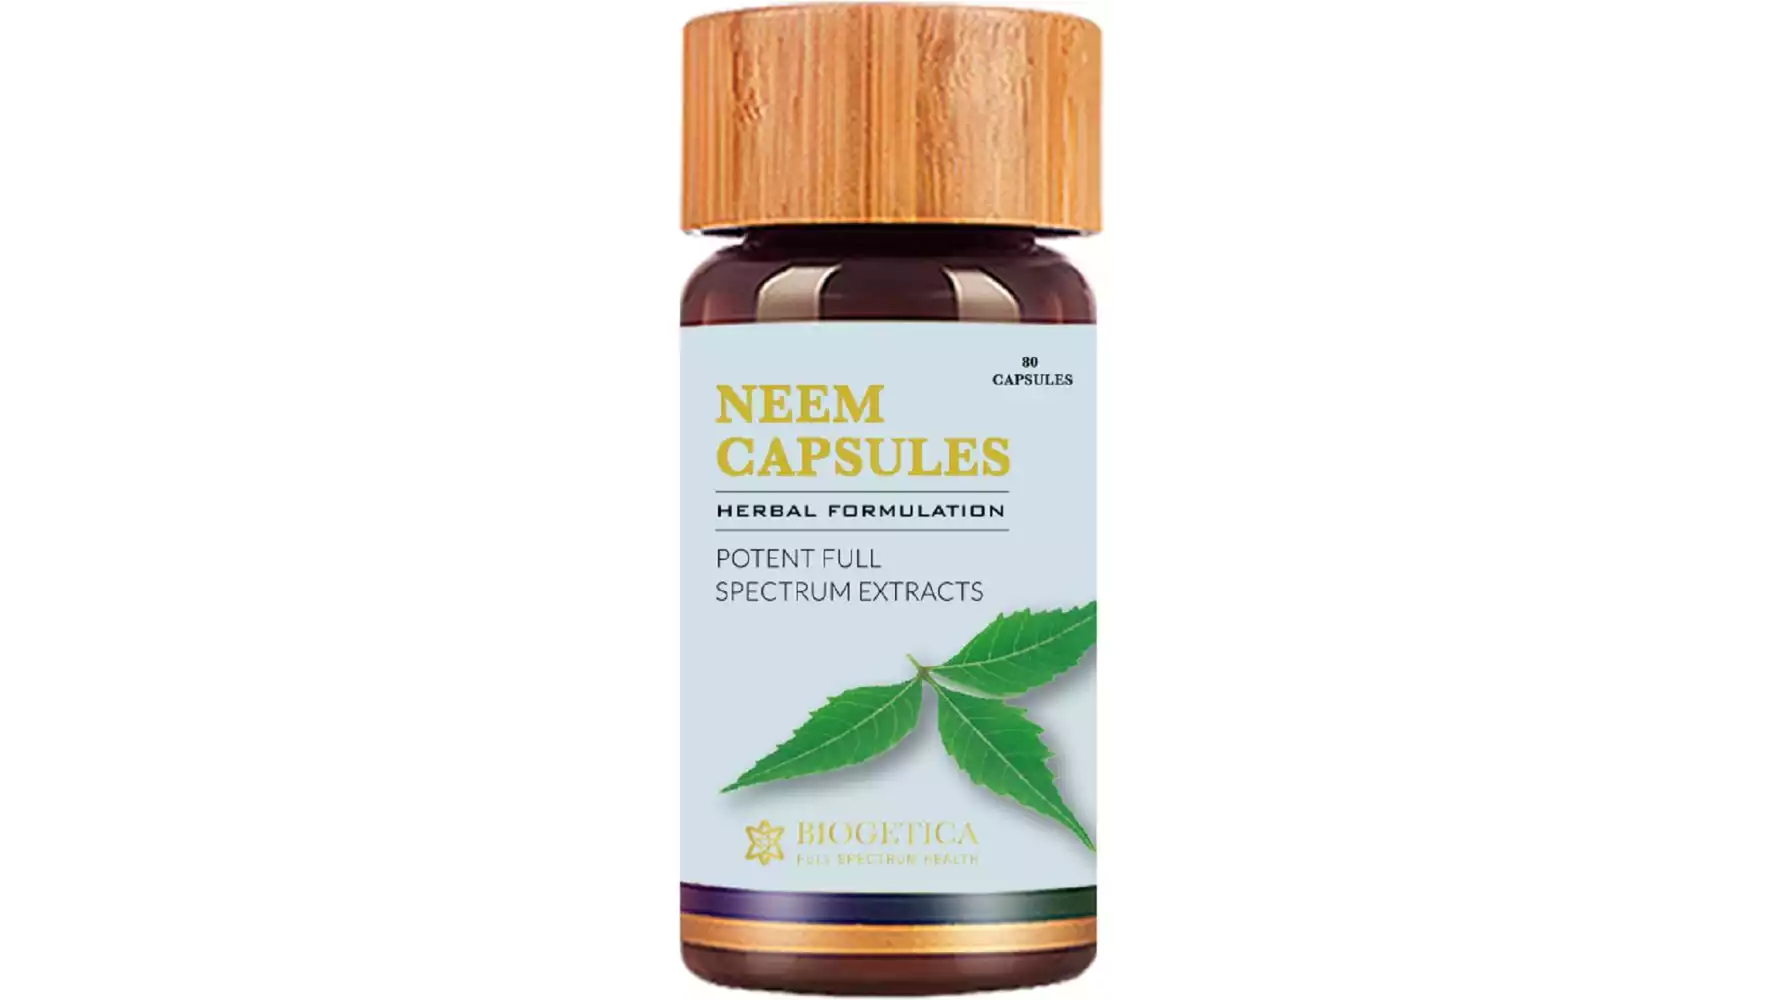 Biogetica Neem Herbal Formulation (80caps)